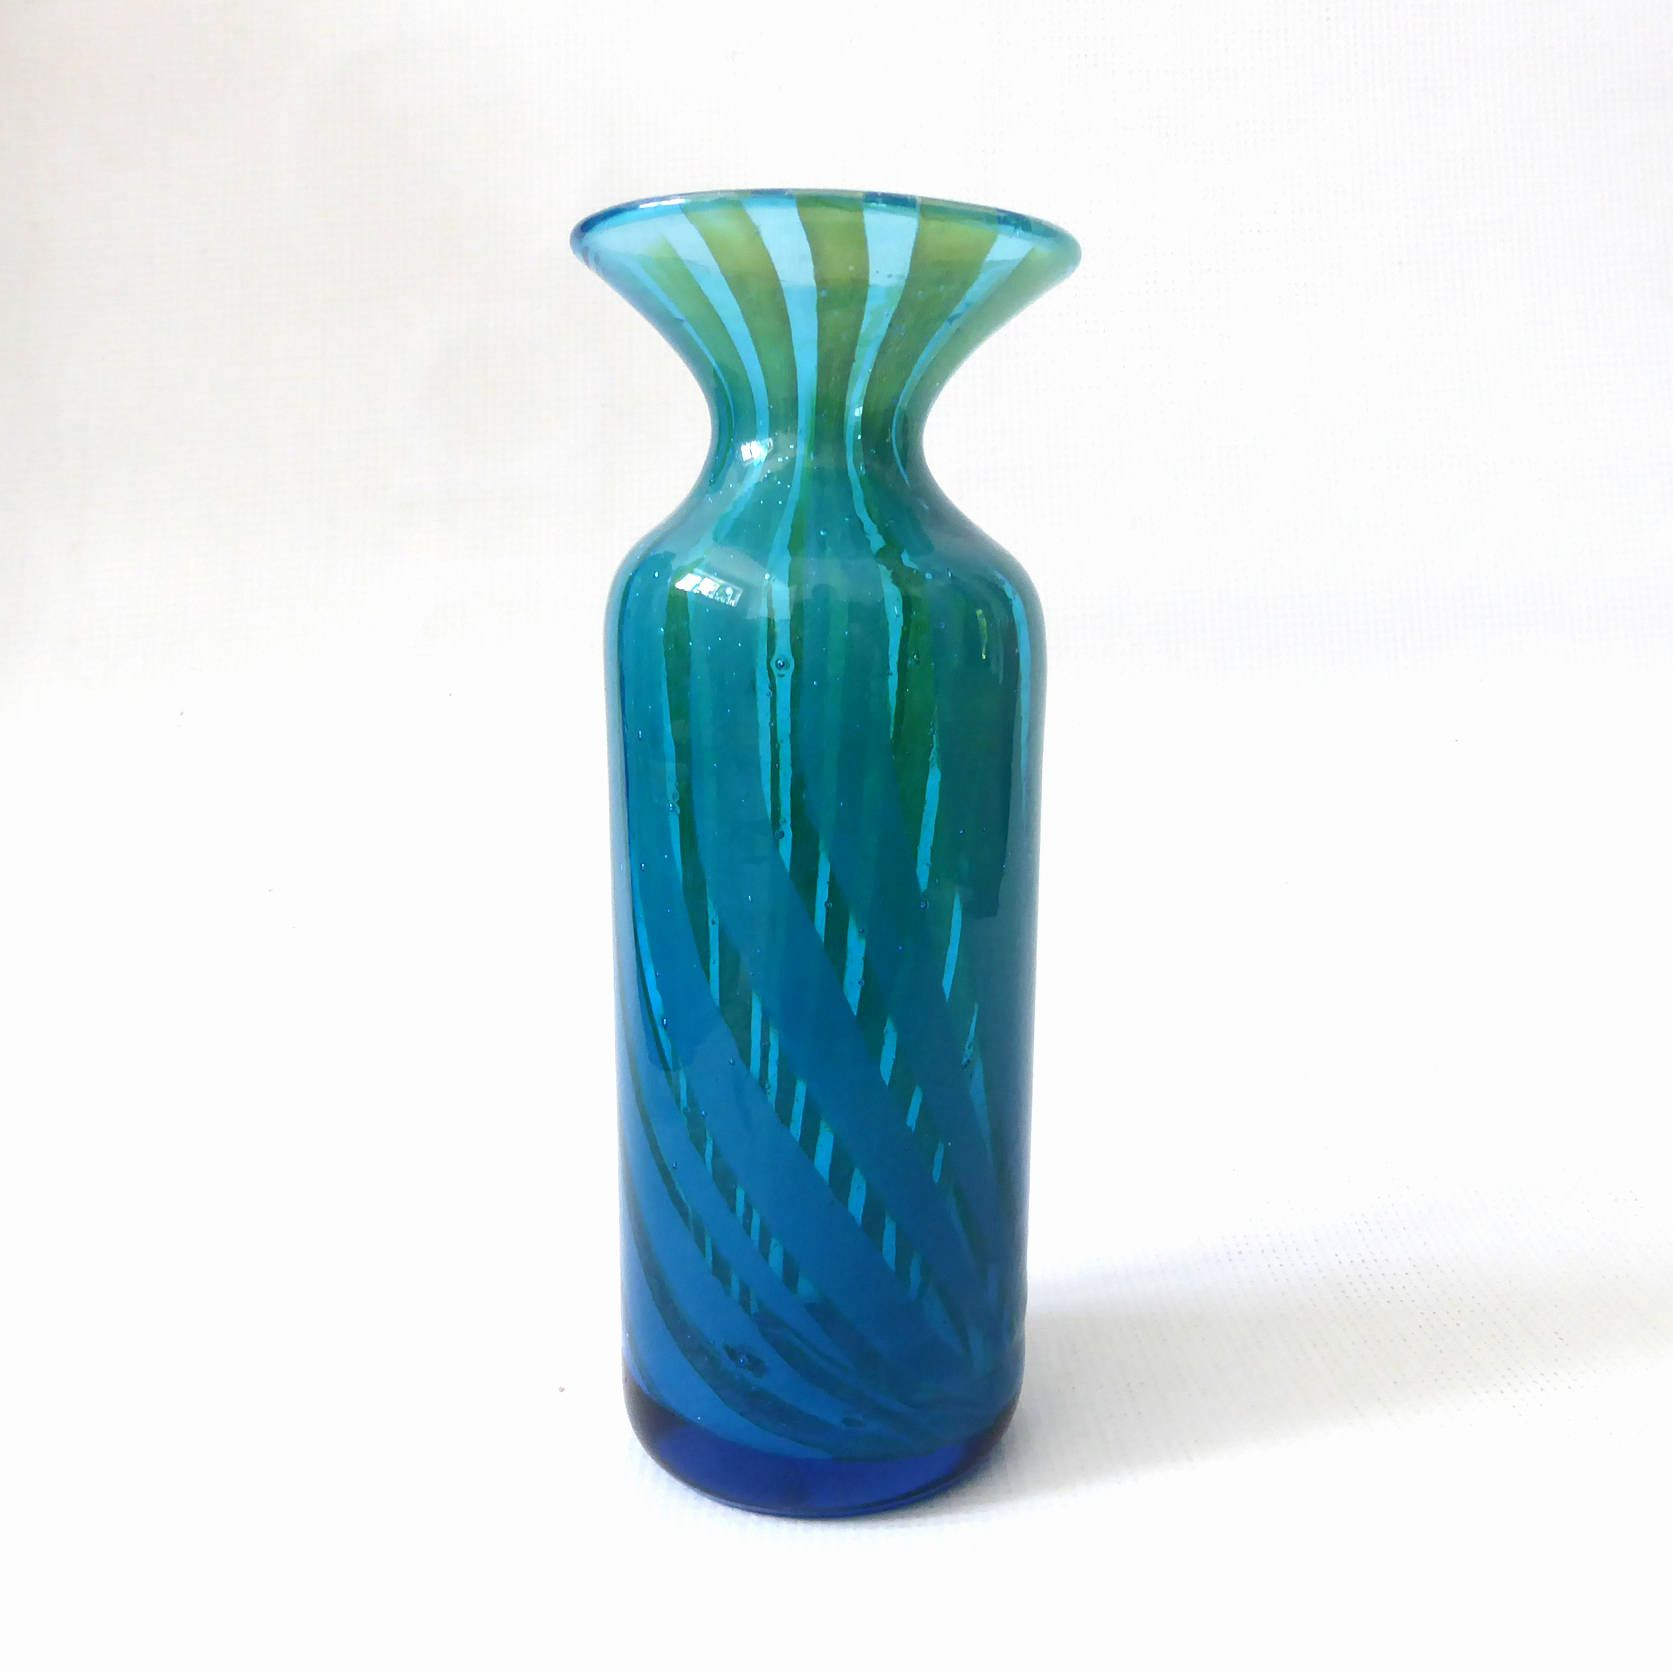 polish glass vases wholesale of 35 antique green glass vases the weekly world in antique glass vases identify vase and cellar image avorcor